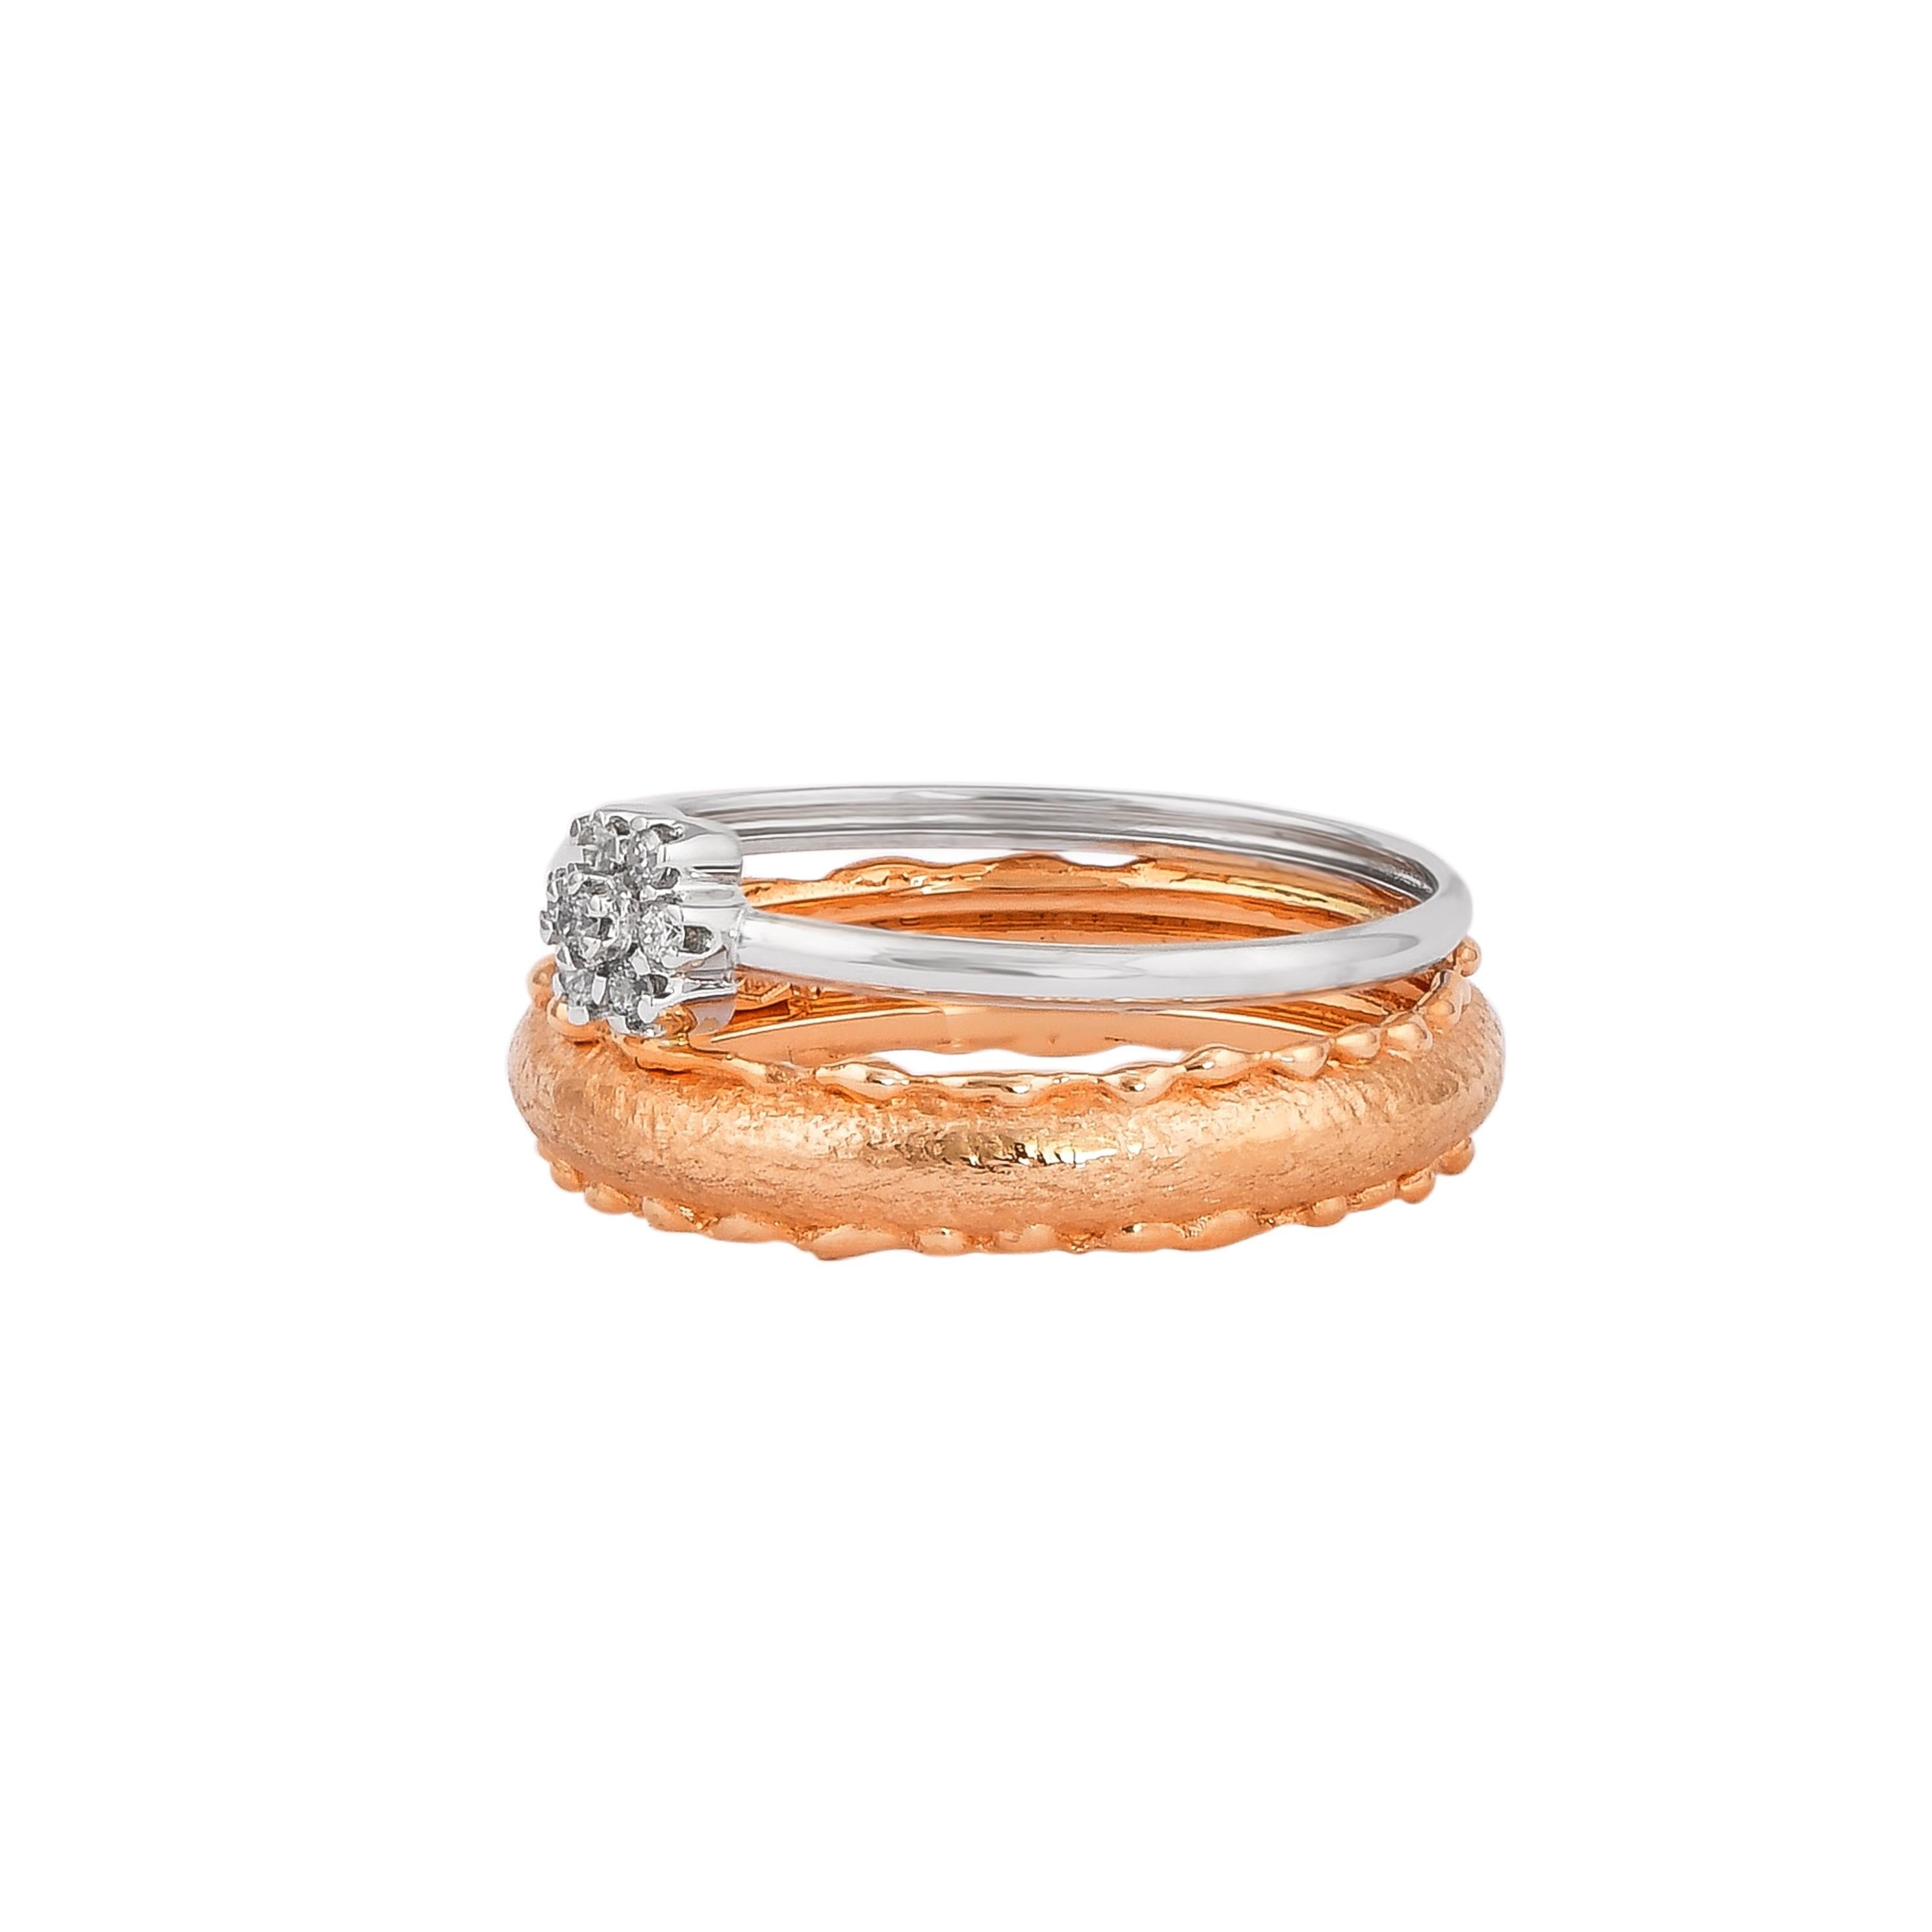 Contemporary 0.056 Carat Diamond Ring in 18 Karat White & Rose Gold For Sale